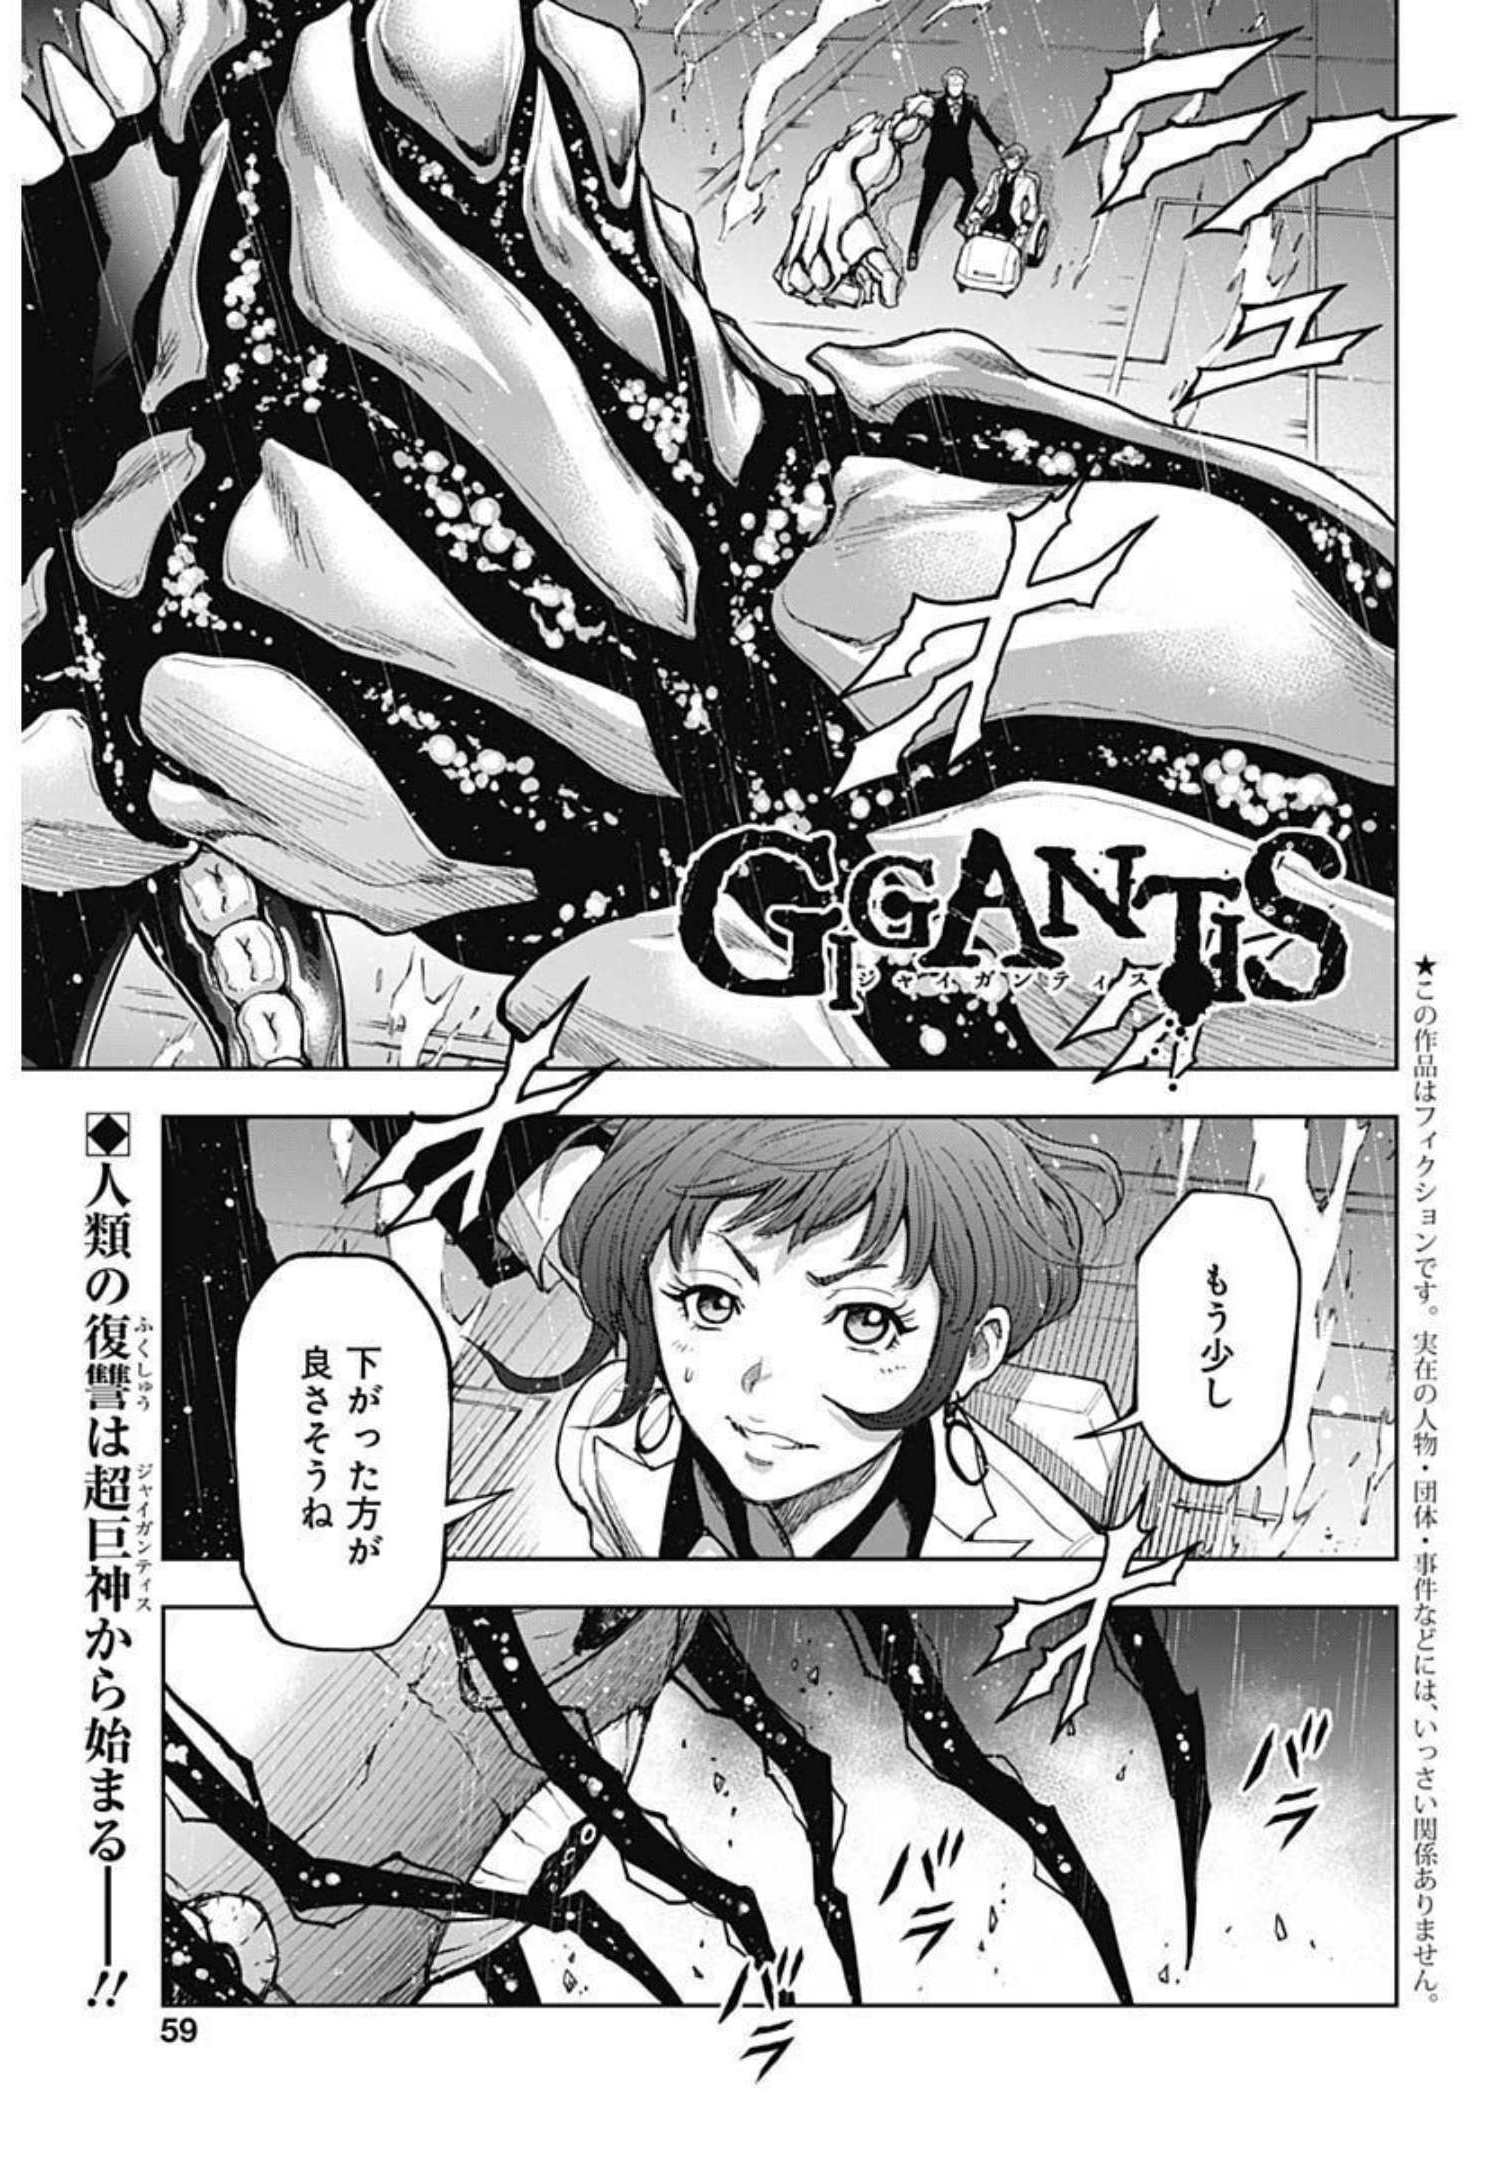 GIGANTISージャイガンティスー 第15話 - Page 1